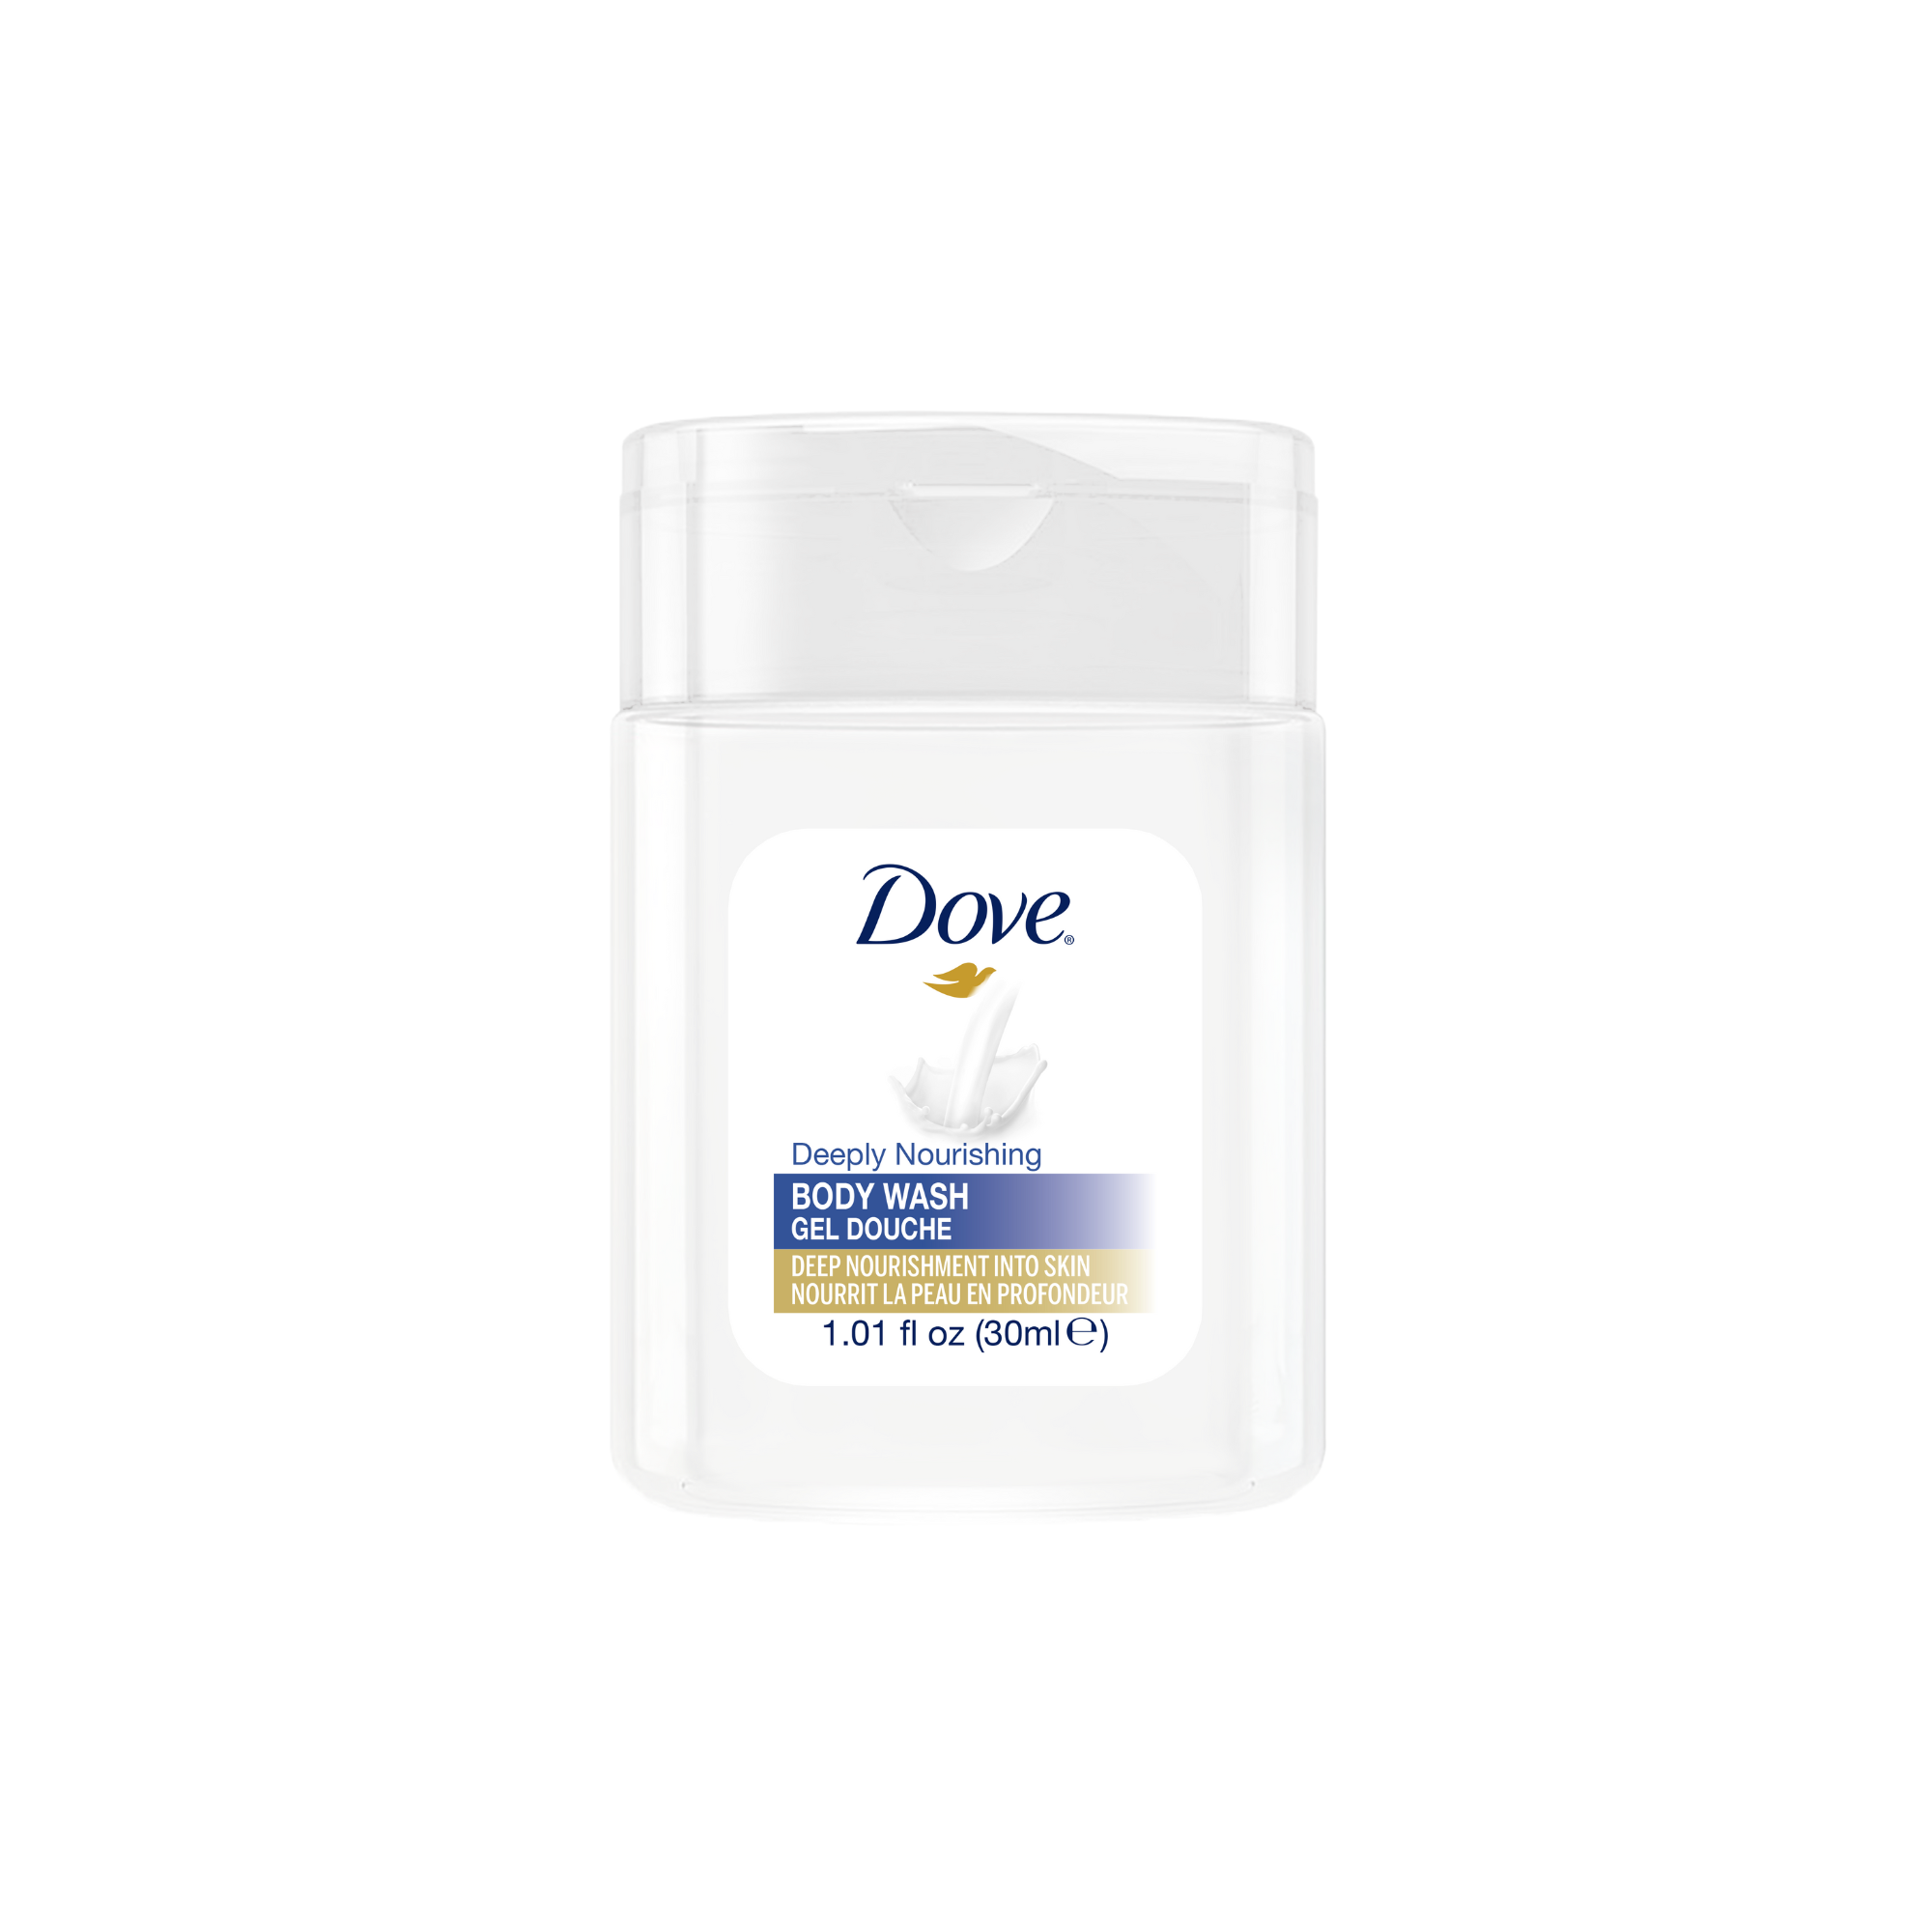 Dove Deeply Nourishing Body Wash Mini - 30ml